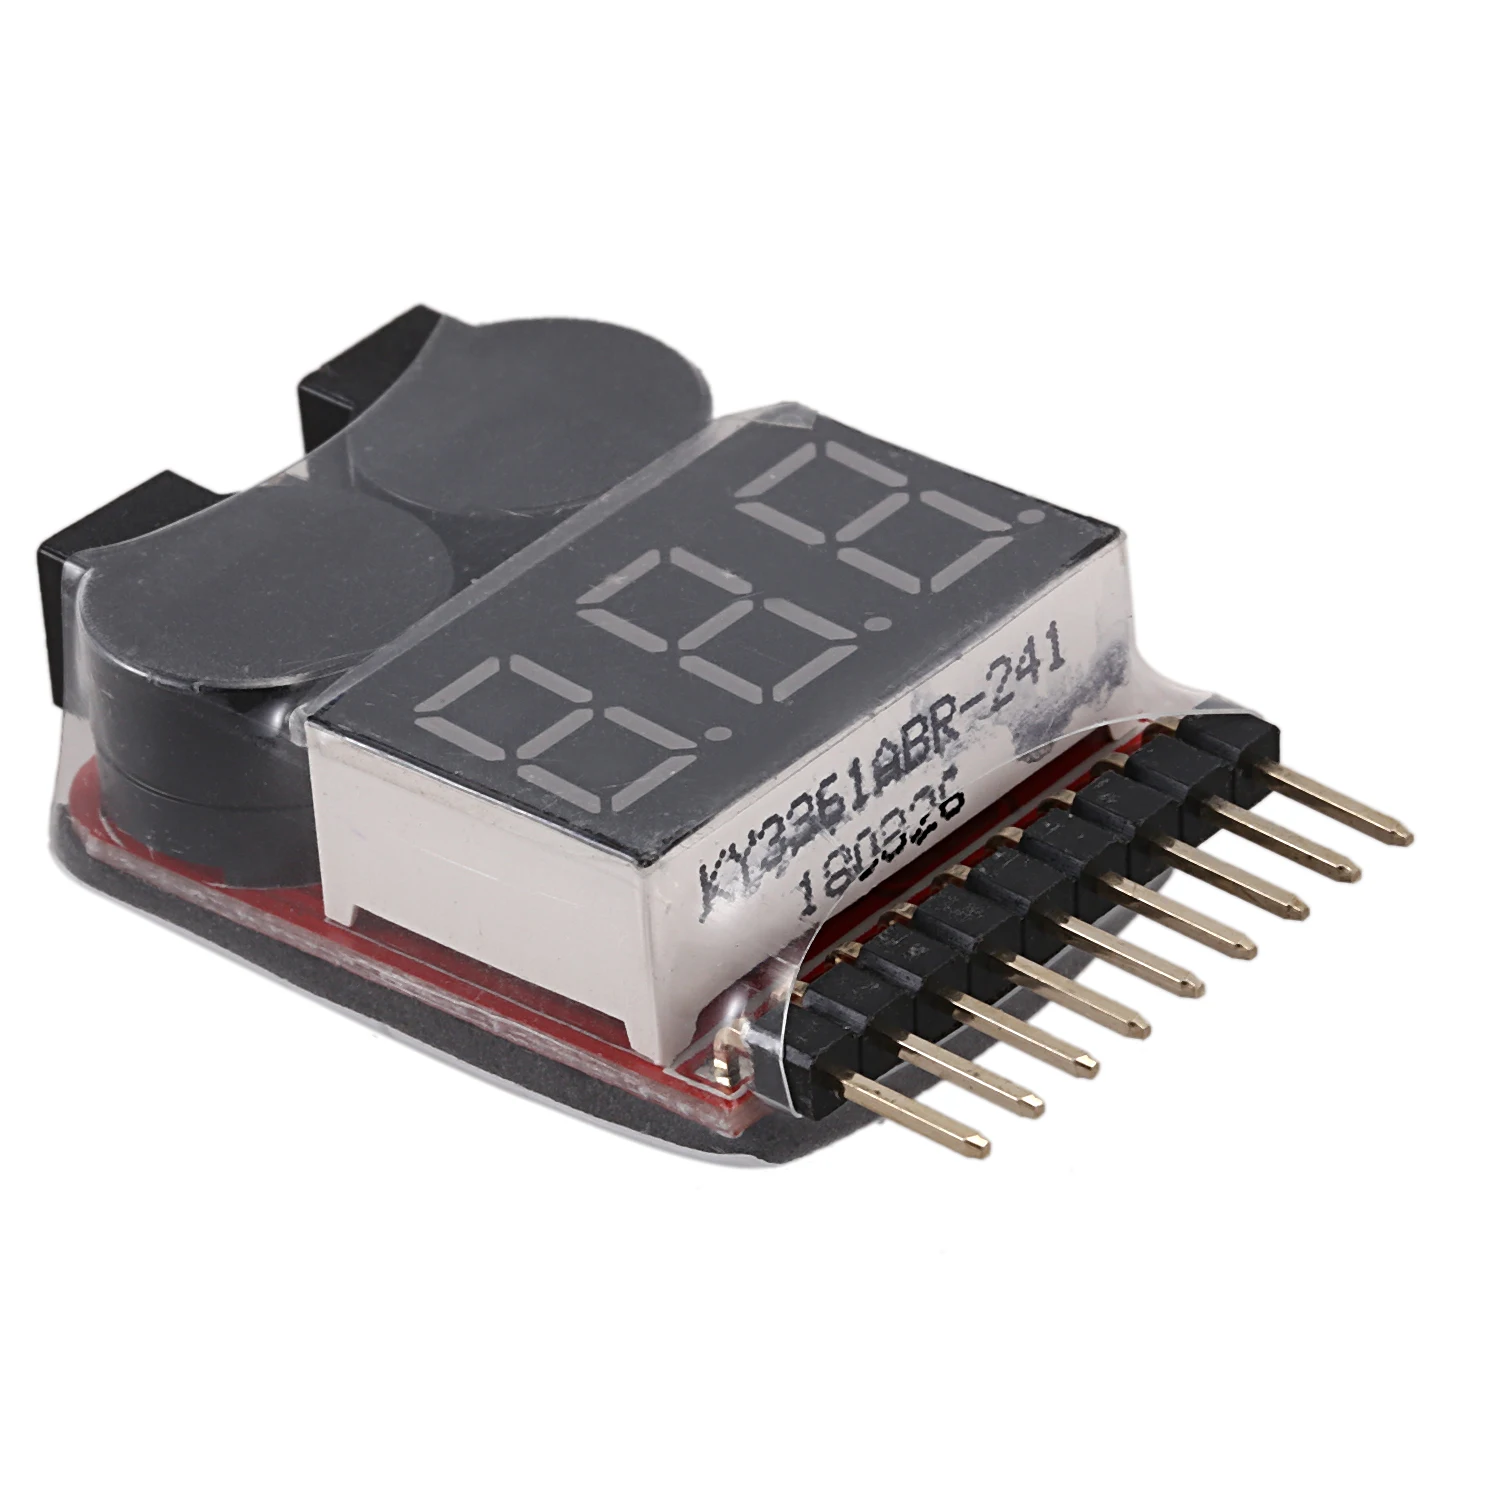 RC Lipo батарея низкого напряжения сигнализации 1 S-S 8 S зуммер Индикатор проверки тестер светодио дный LED